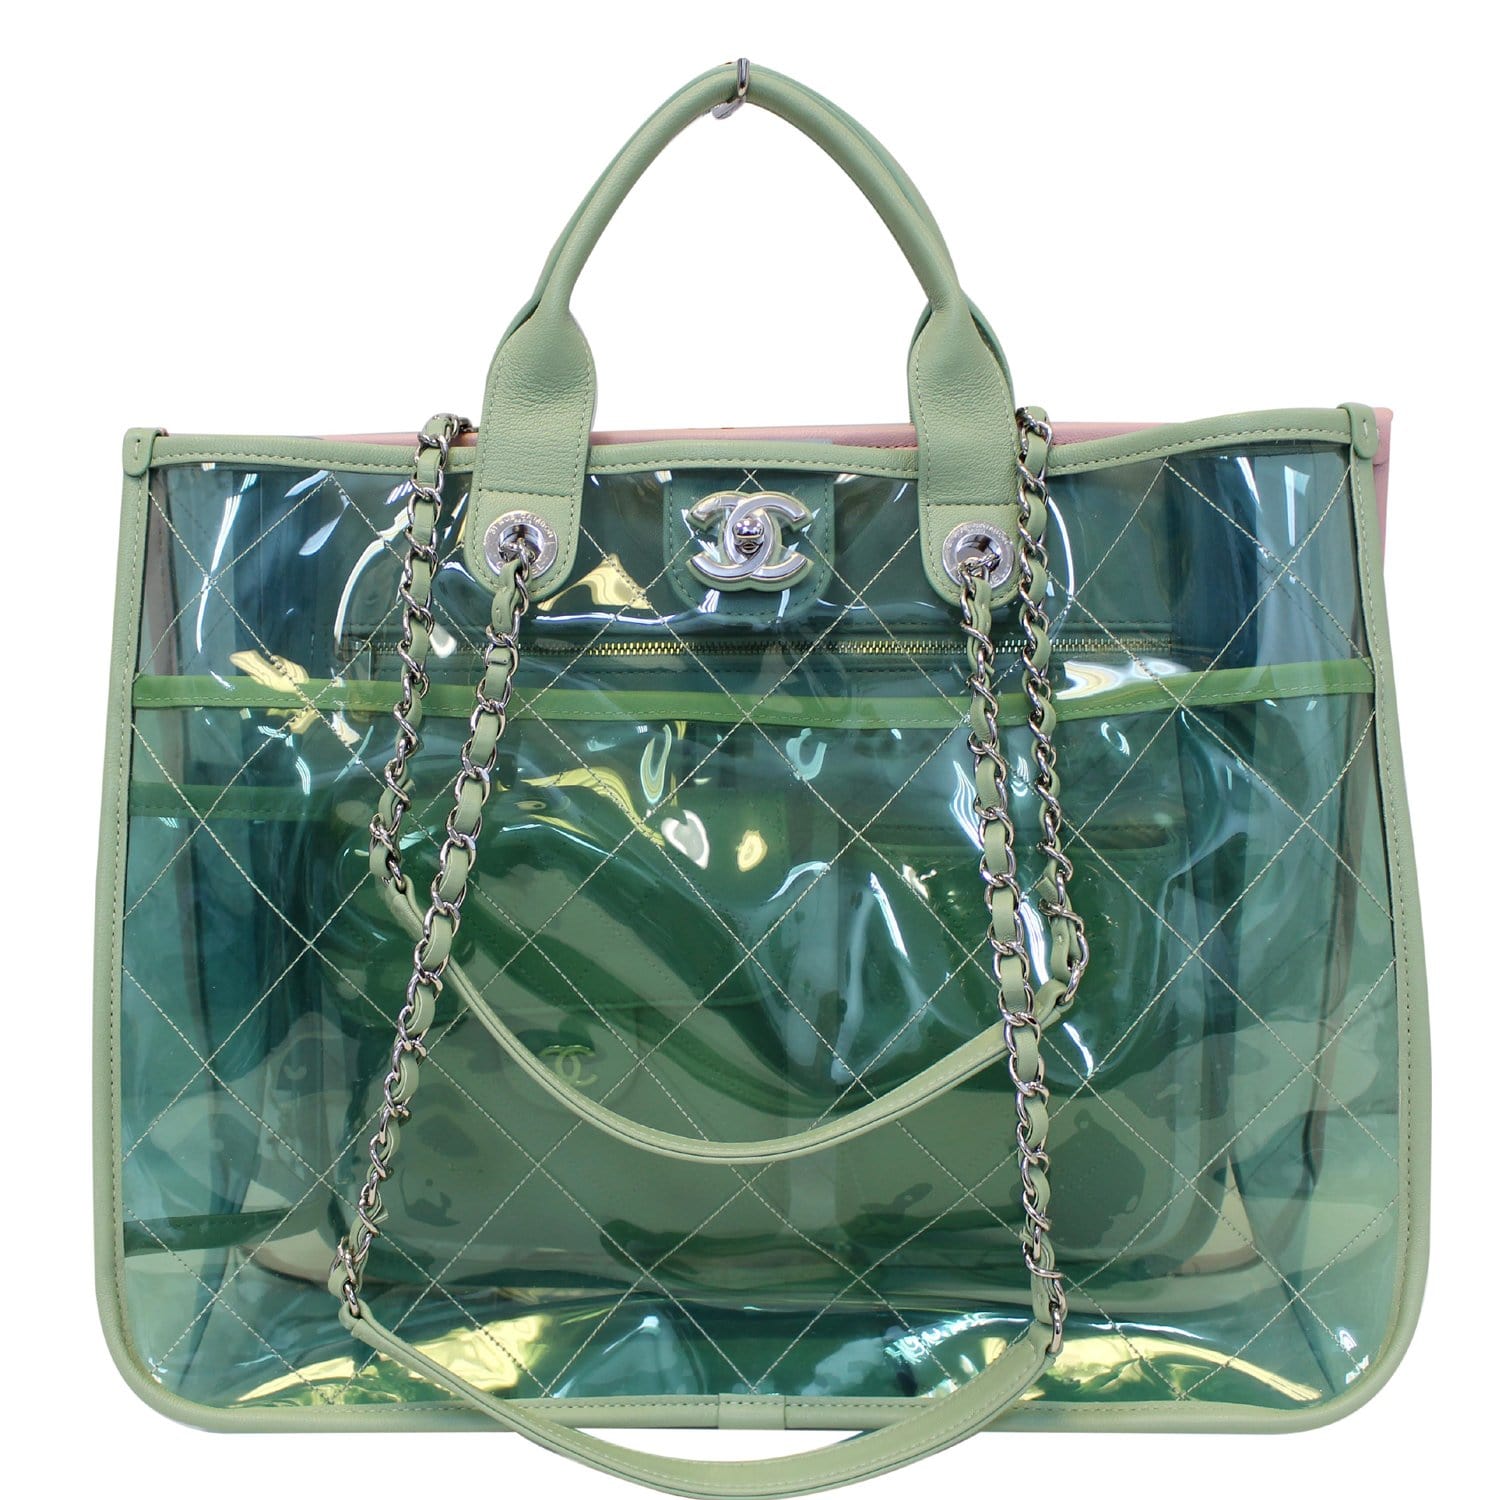 Chanel Lambskin PVC Quilted Medium Coco Splash Shopping Bag Blue